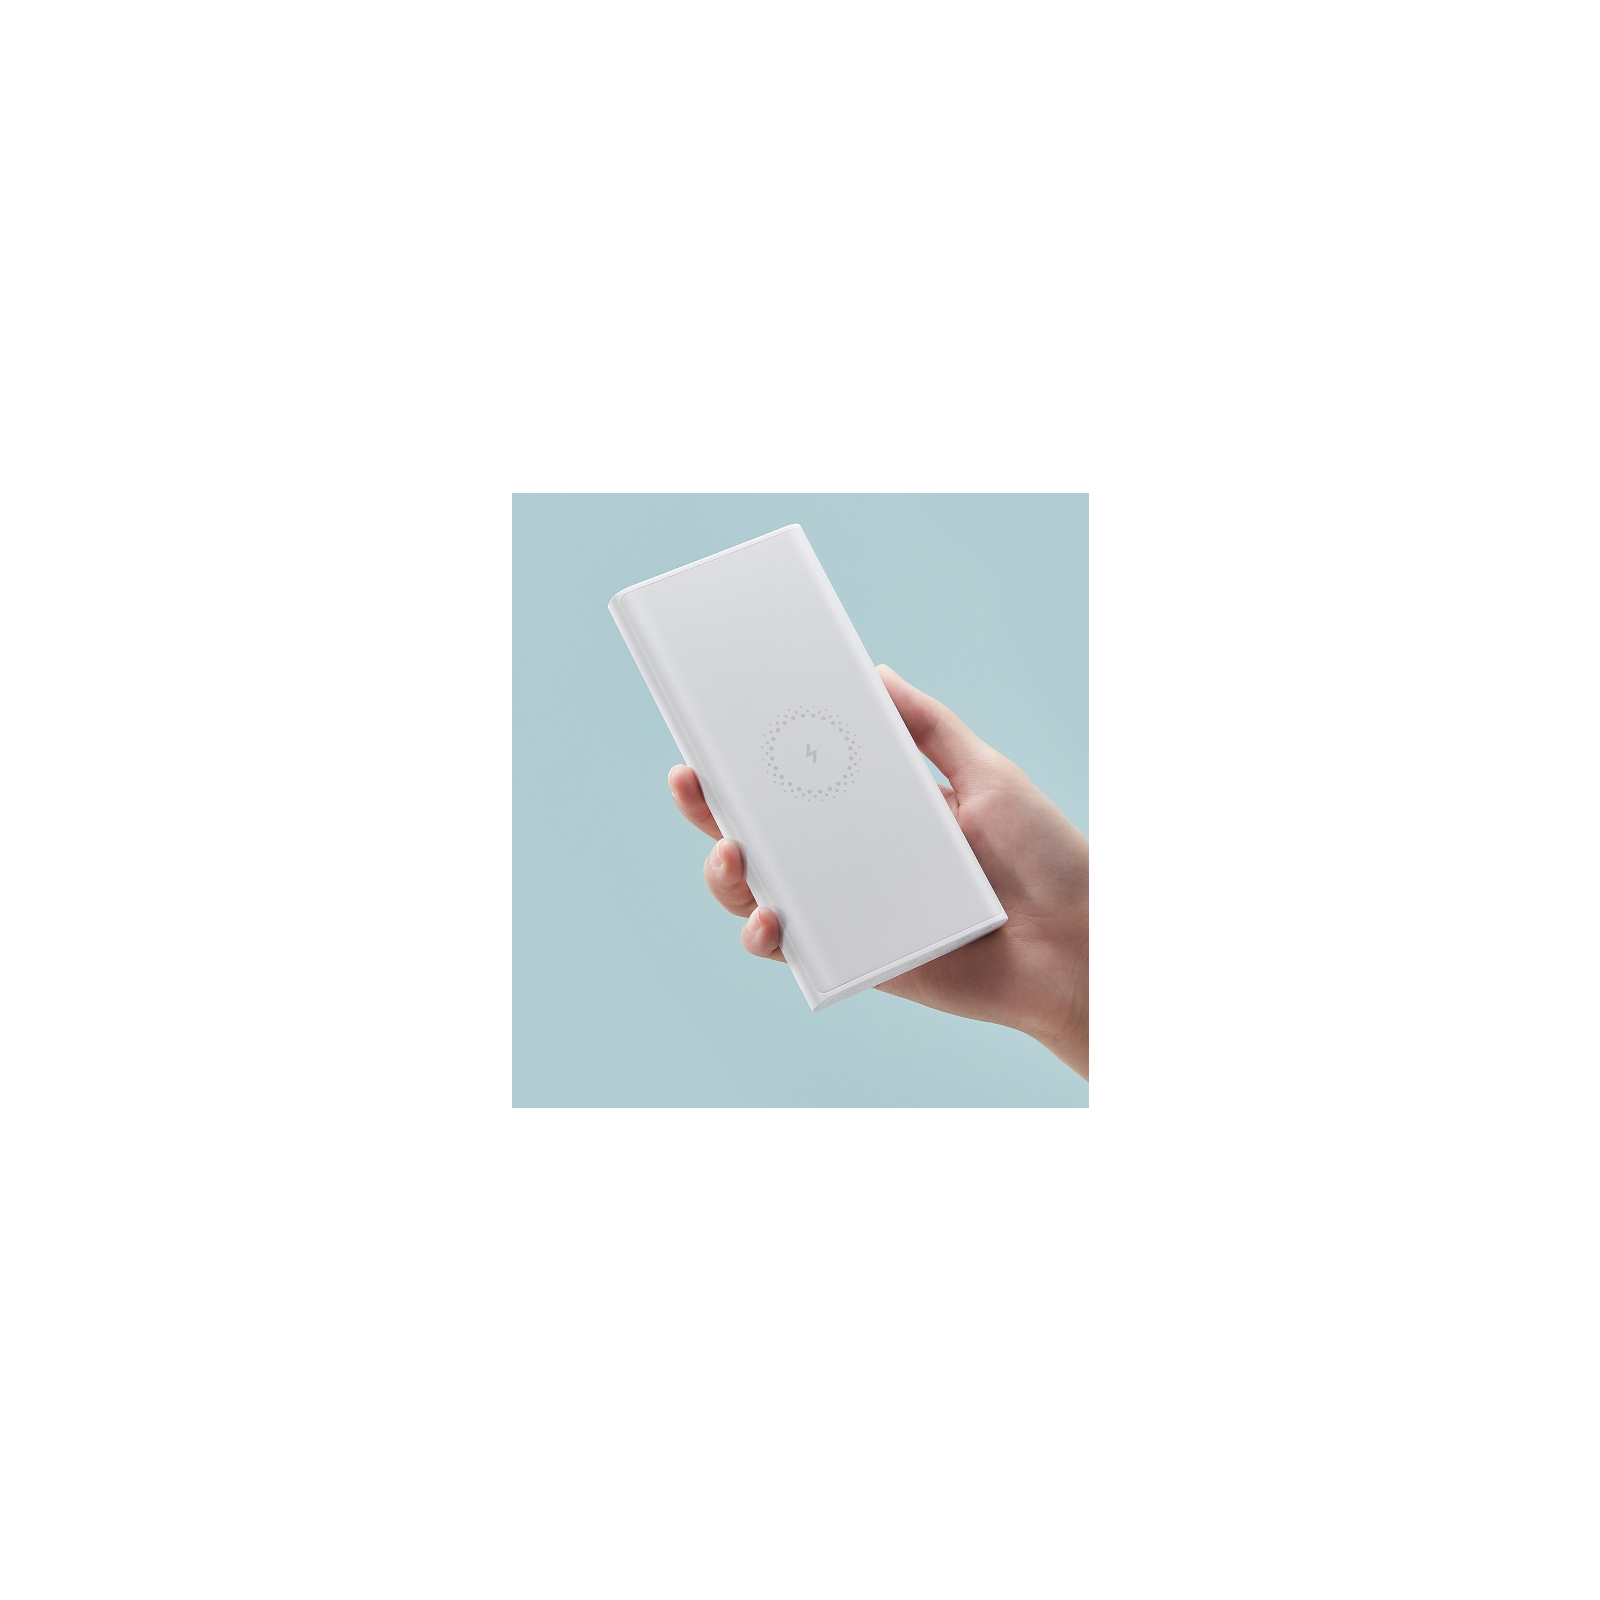 Батарея универсальная Xiaomi Mi Wireless Youth Edition 10000 mAh White (562530) изображение 4